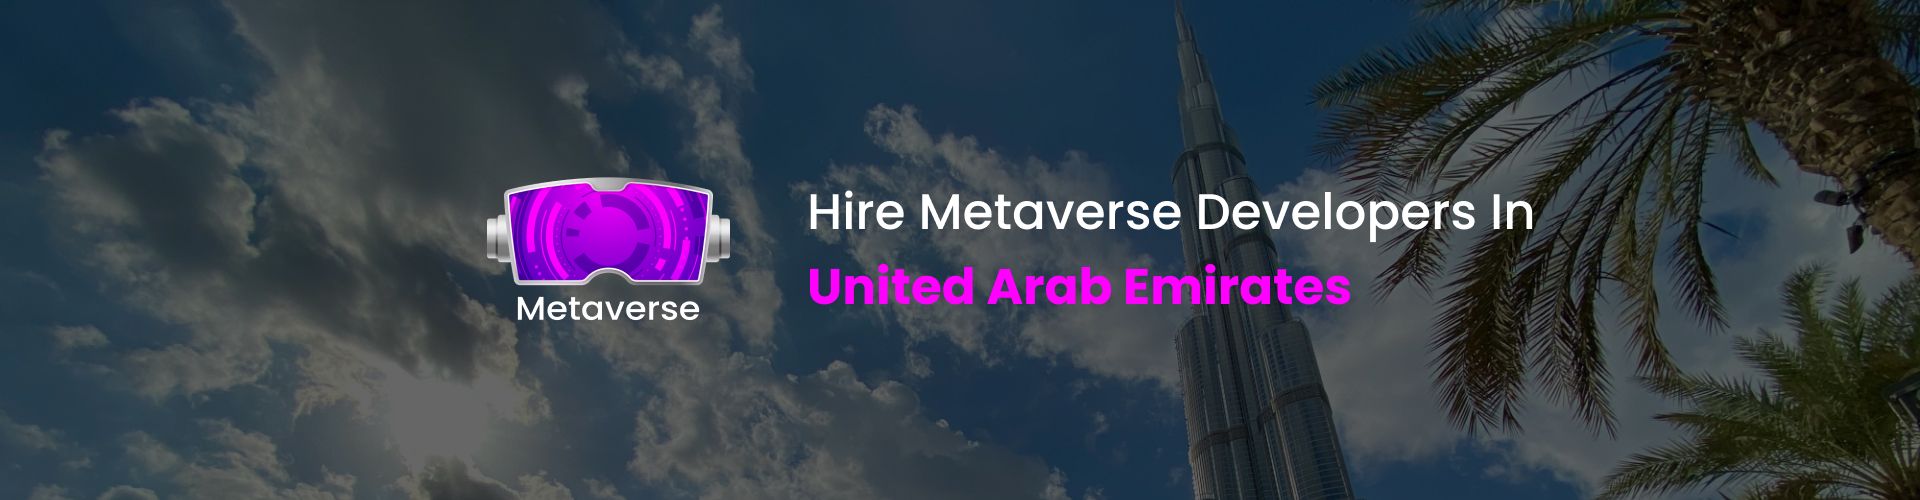 metaverse developers in united arab emirates